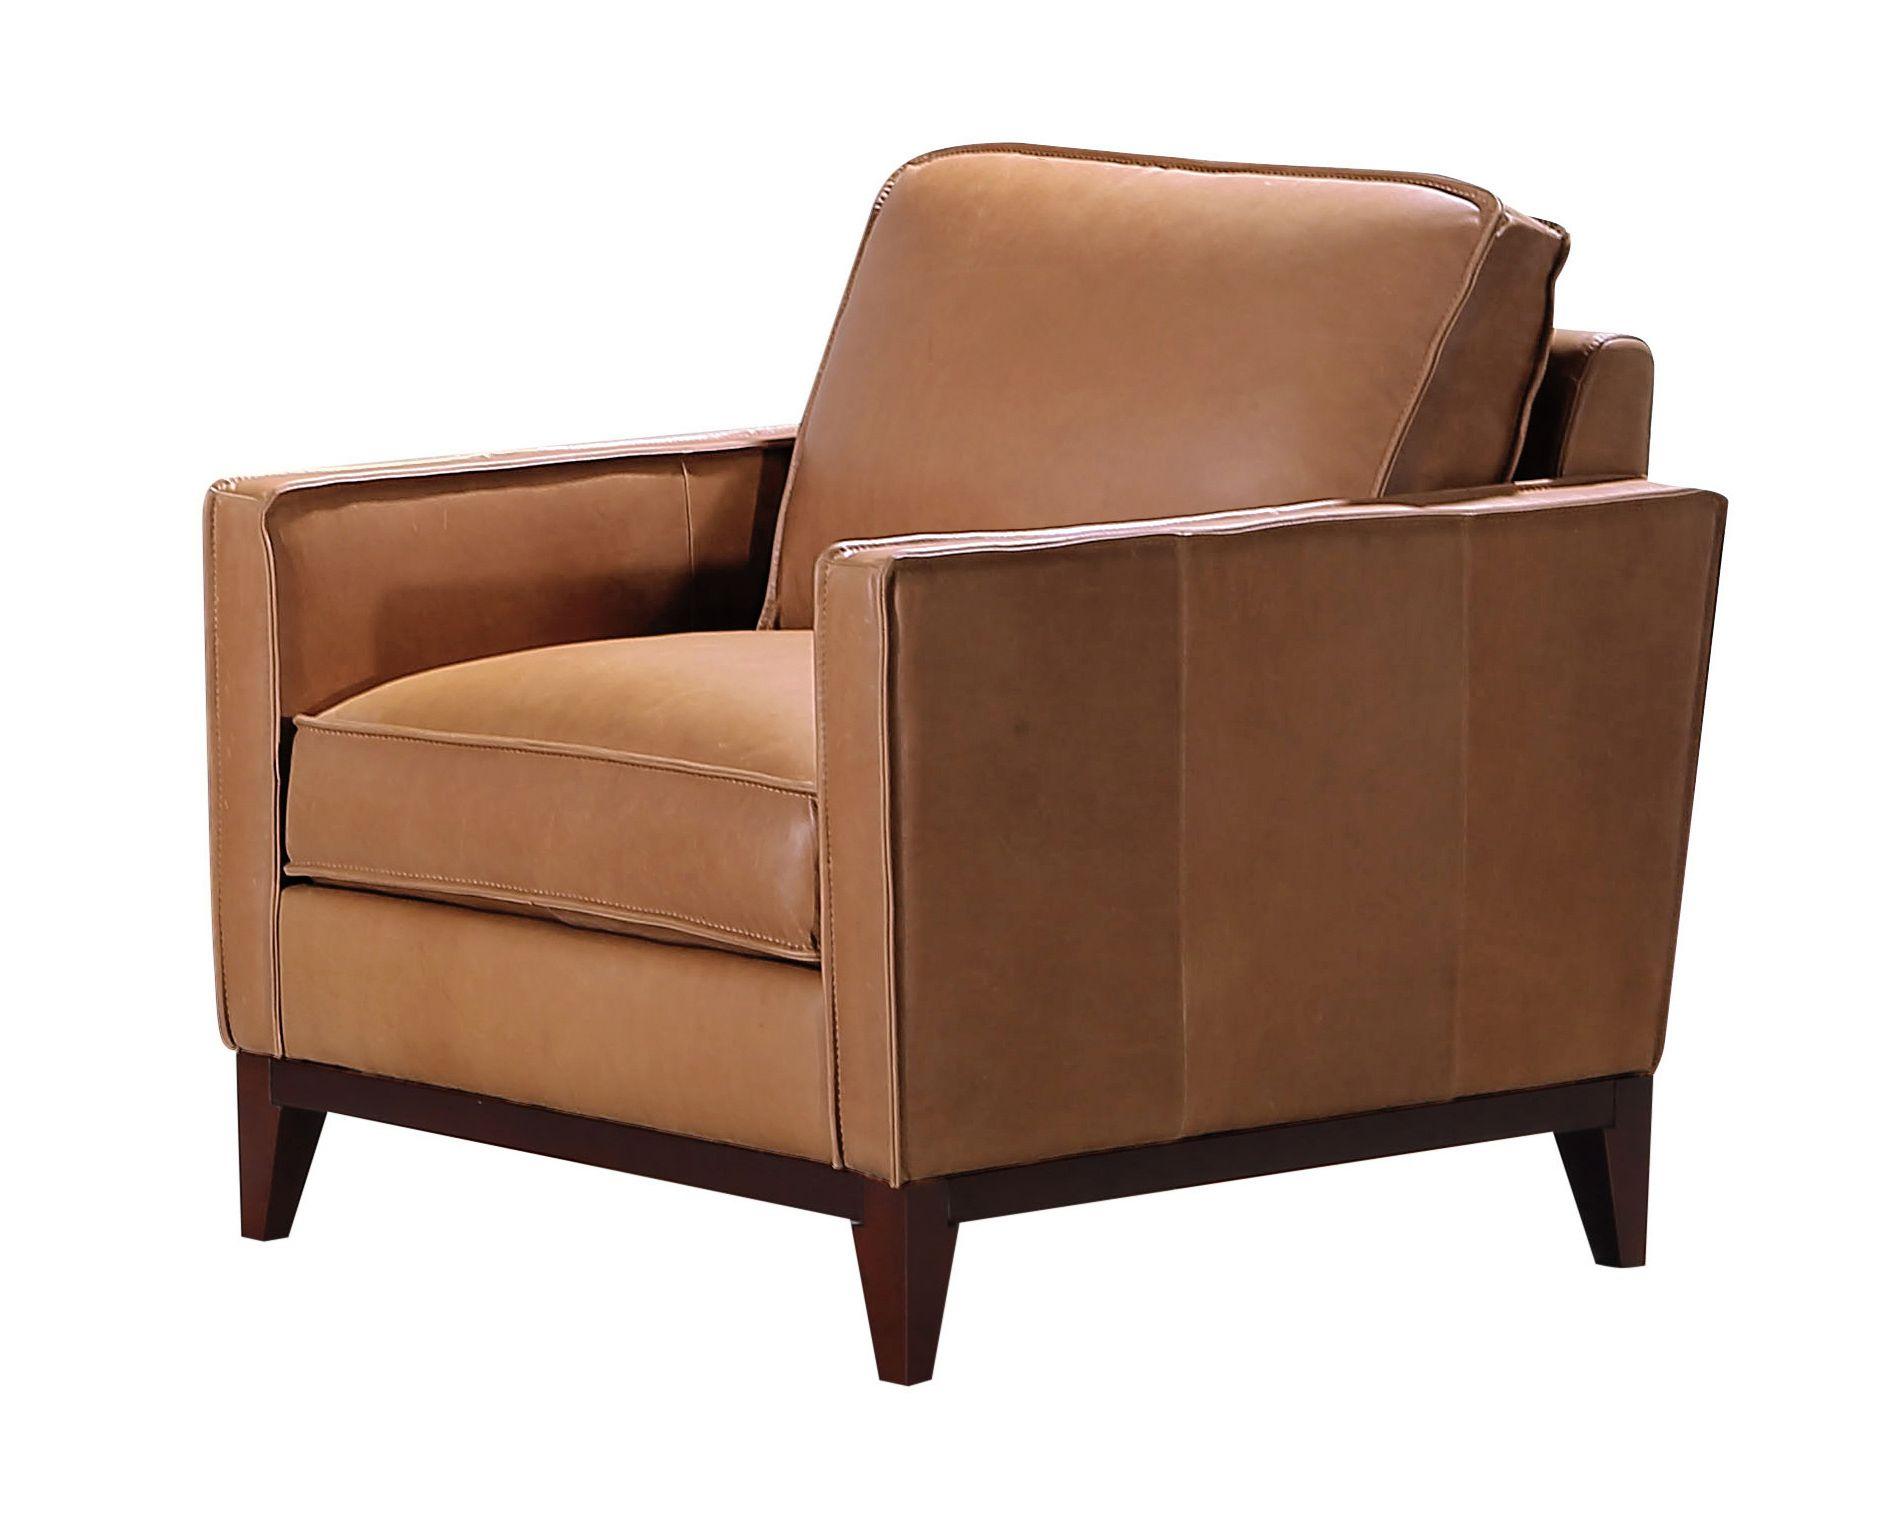 Contemporary, Modern, Classic Arm Chair VGCA6394-BRN-CH VGCA6394-BRN-CH in Brown Italian Leather